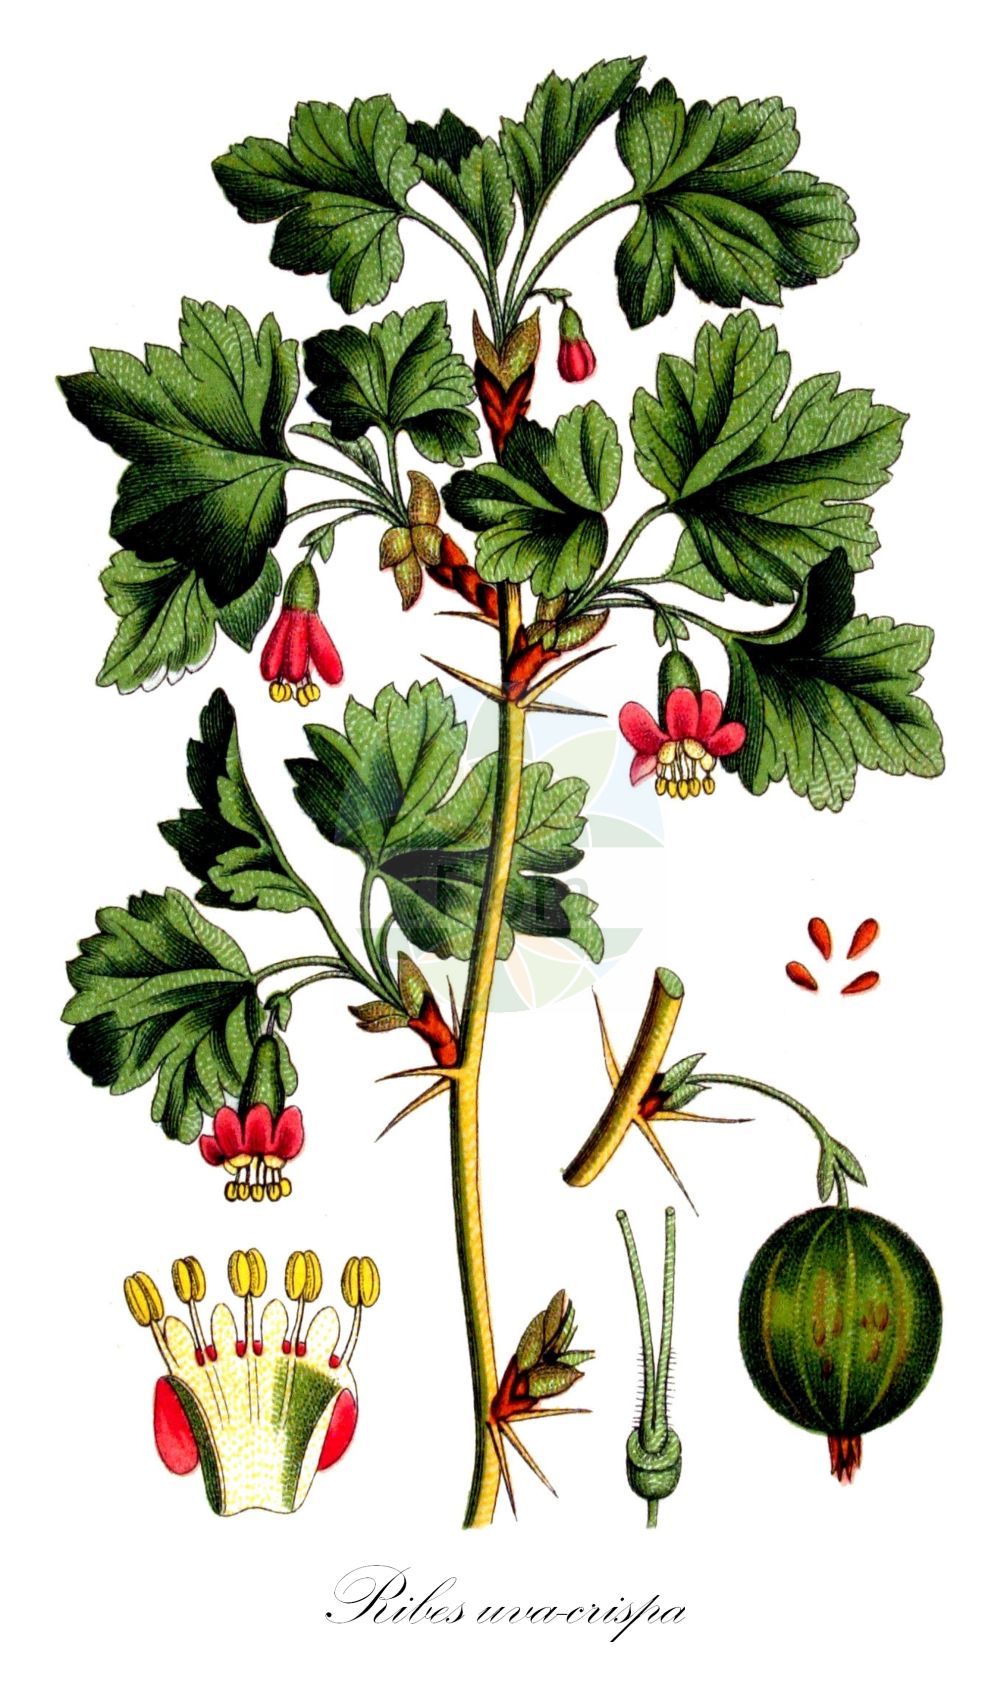 Historische Abbildung von Ribes uva-crispa (Stachelbeere - Gooseberry). ---- Historical Drawing of Ribes uva-crispa (Stachelbeere - Gooseberry).(Ribes uva-crispa,Stachelbeere,Gooseberry,Grossularia reclinata,Ribes grossularia,Ribes reclinatum,Ribes uva-crispa,Ribes uva-crispa subsp. reclinatum,Stachelbeere,Gooseberry,European Gooseberry,Ogrose,Ribes,Johannisbeere,Currant,Grossulariaceae,Stachelbeergewächse,Gooseberry family,Sturm (1796f))